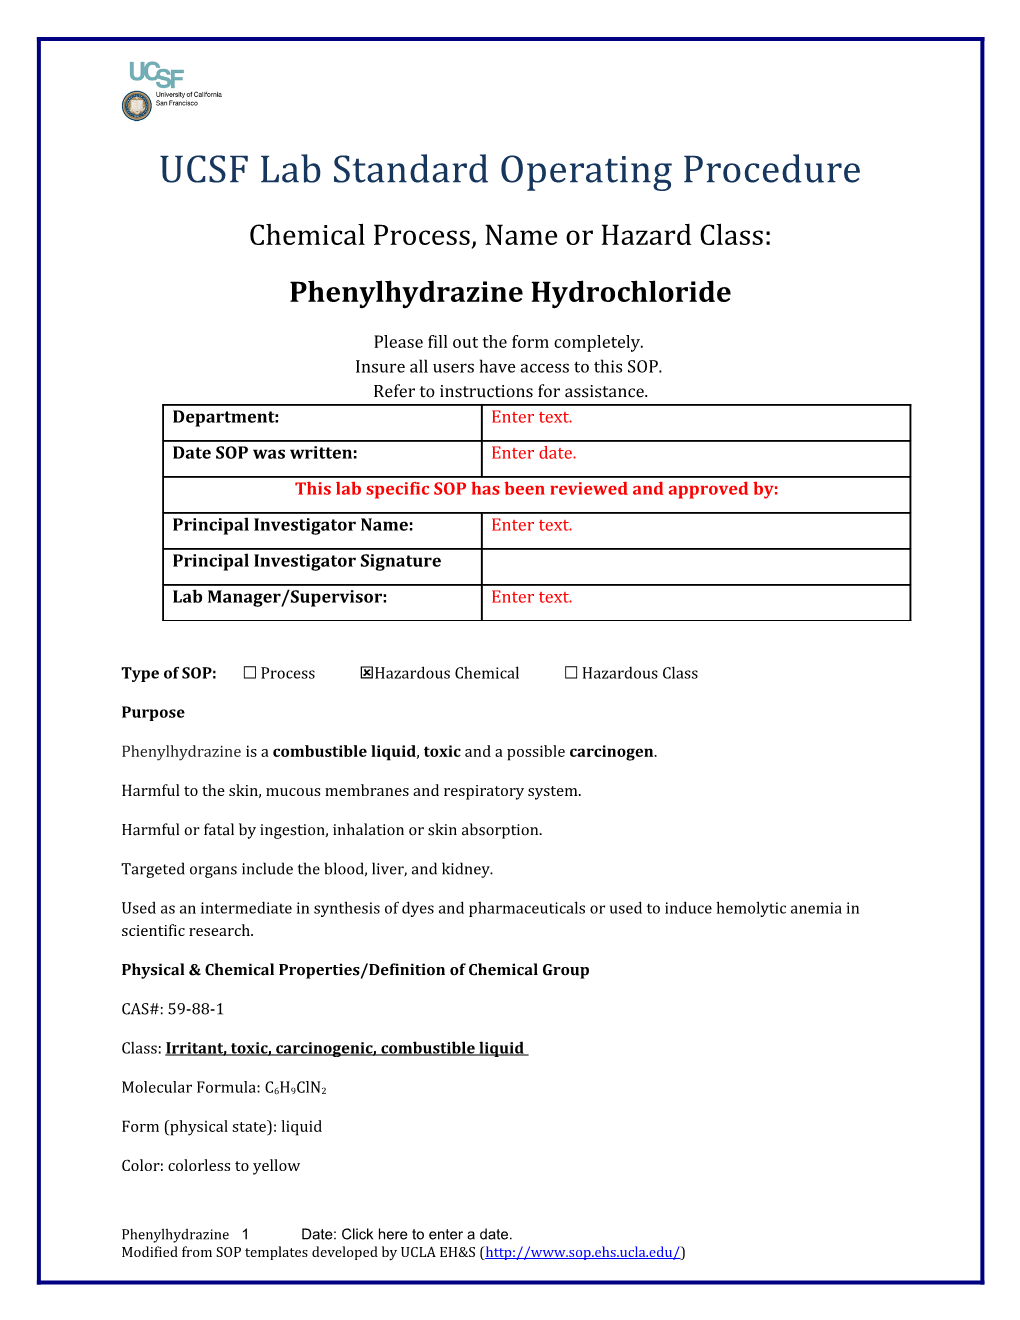 UCSF Lab Standard Operating Procedure s42